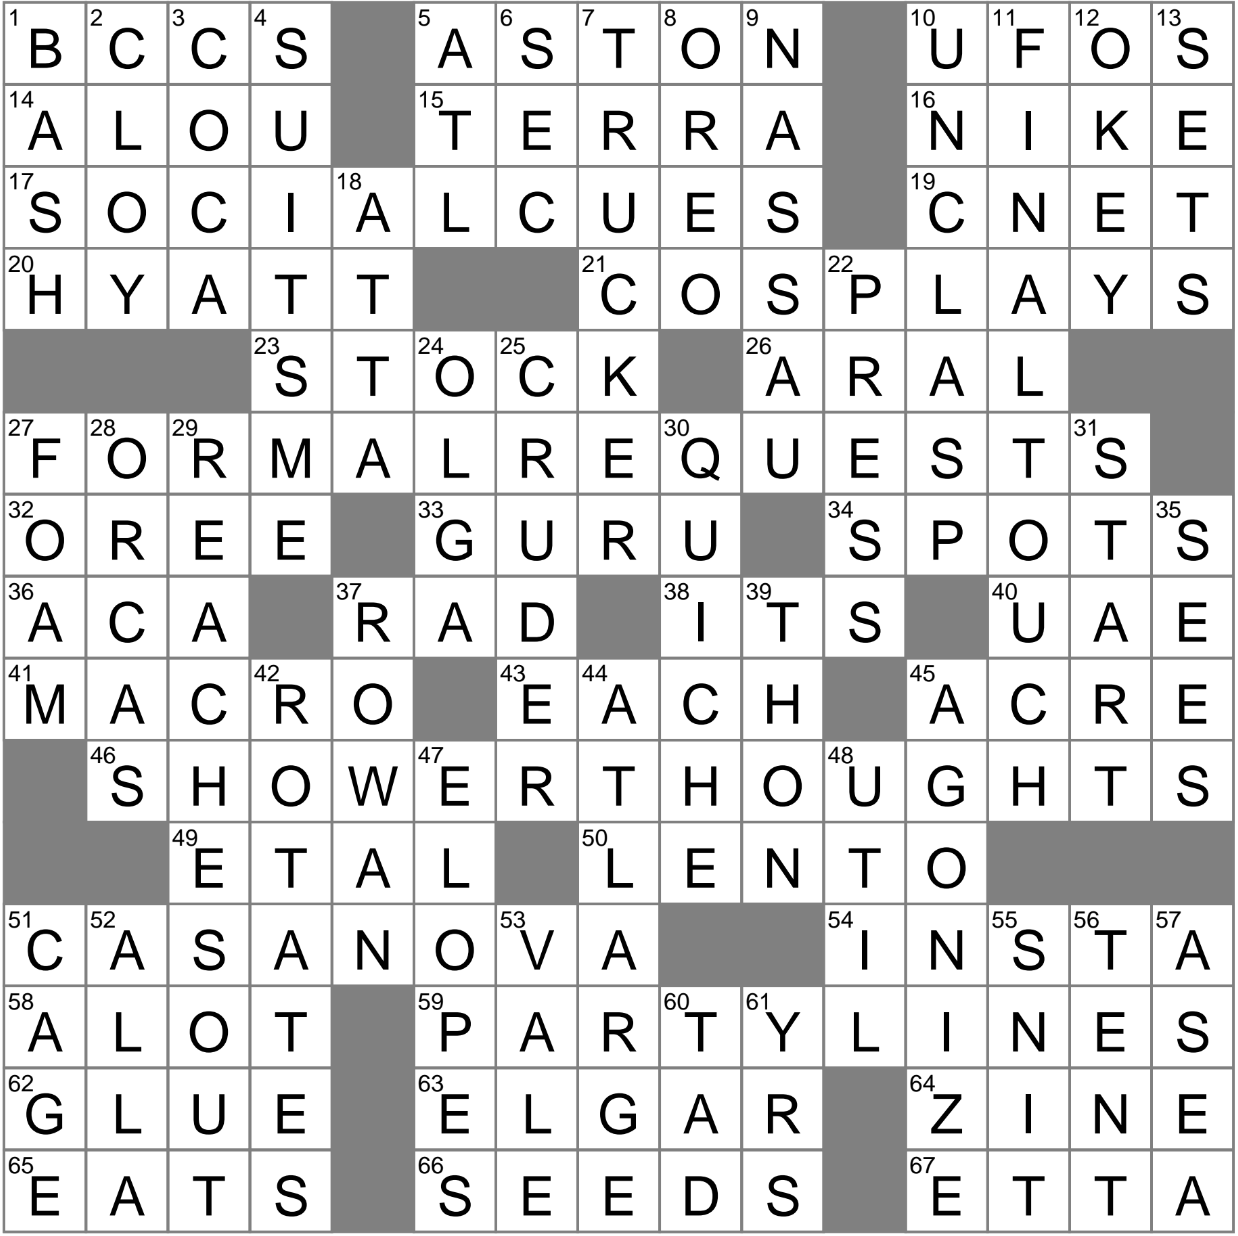 LA Times Crossword 29 Jun 23 Thursday LAXCrossword com